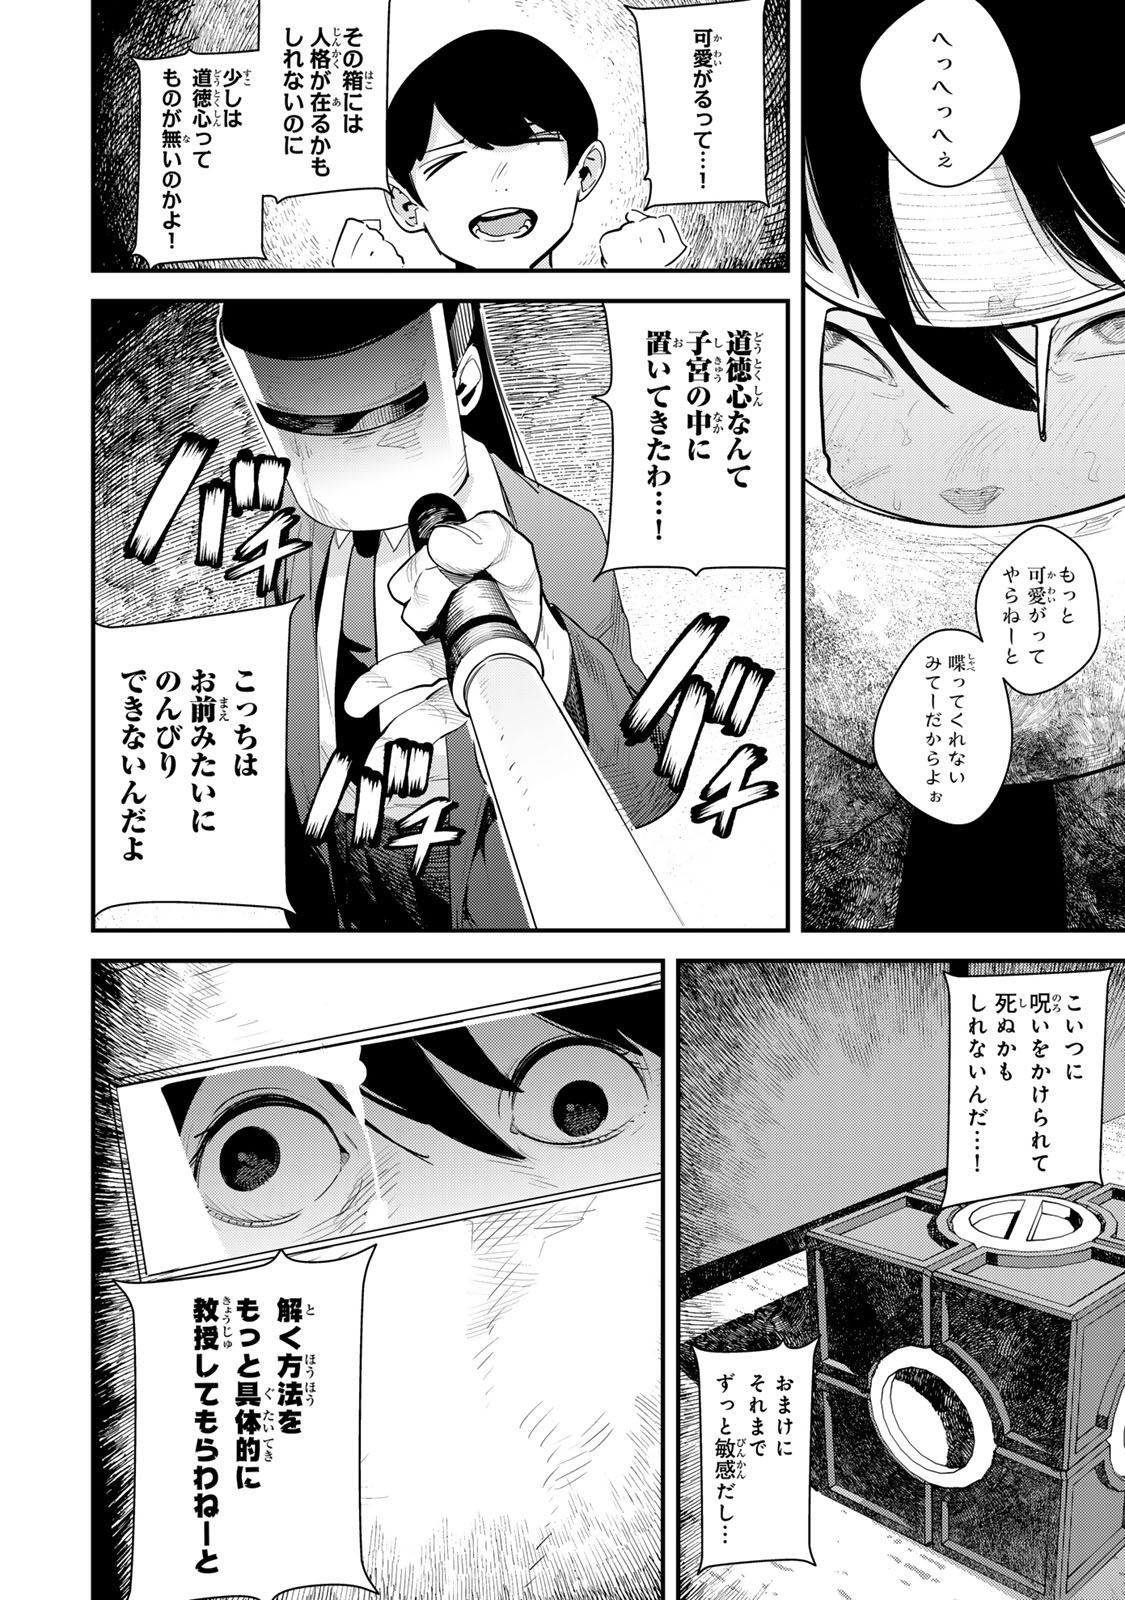 Seima Toubatsu Deneidan - Chapter 2 - Page 4